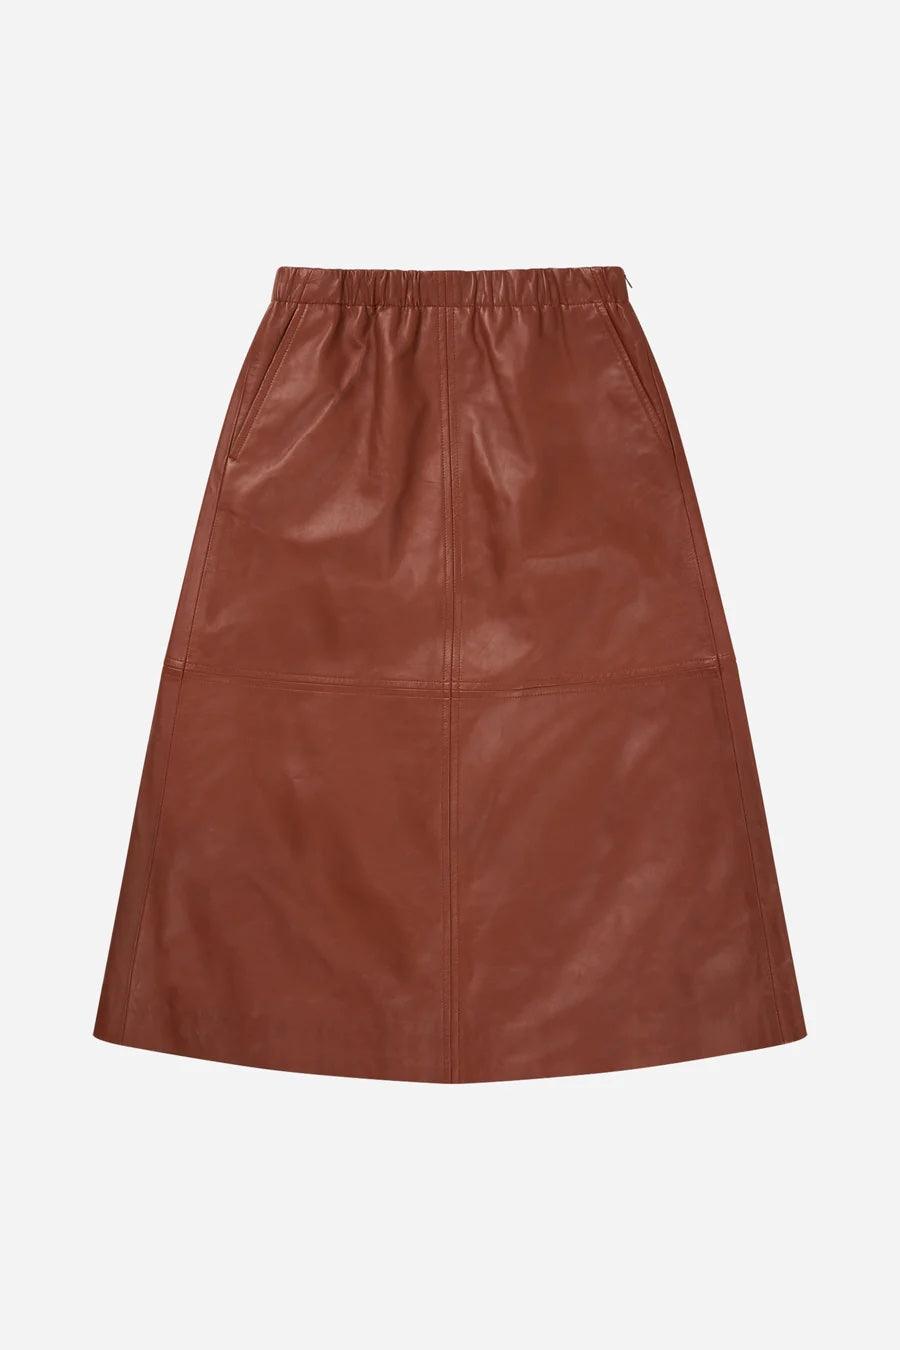 Charm Skirt Rust - No22 Damplassen